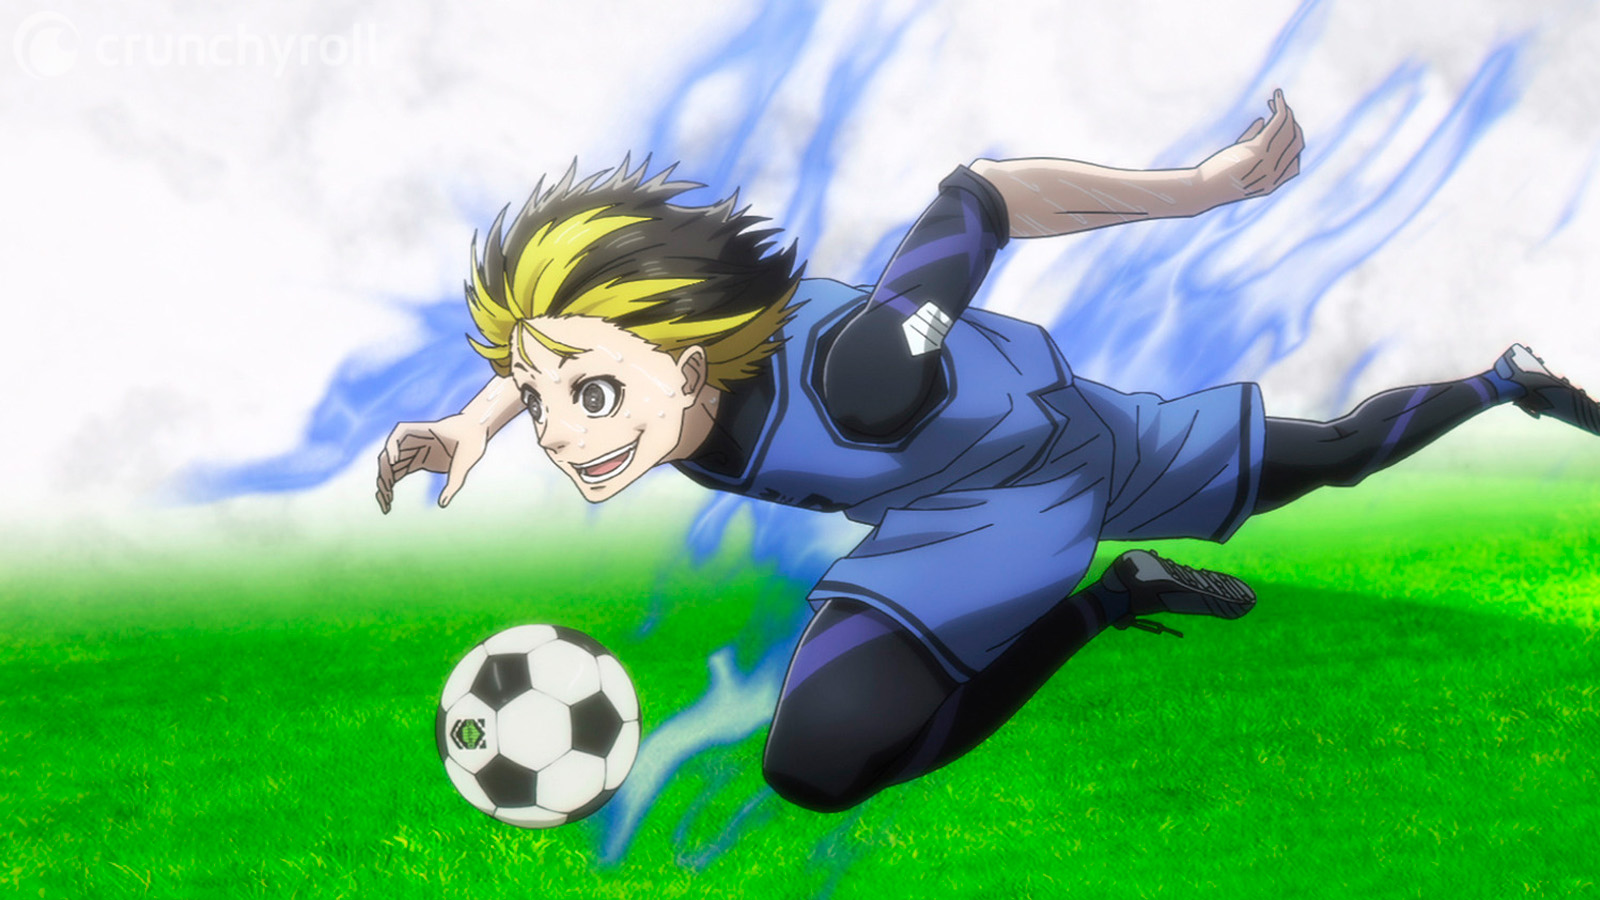 Crunchyroll - DEEP DIVE: Soccer in Anime, from Captain Tsubasa to BLUELOCK